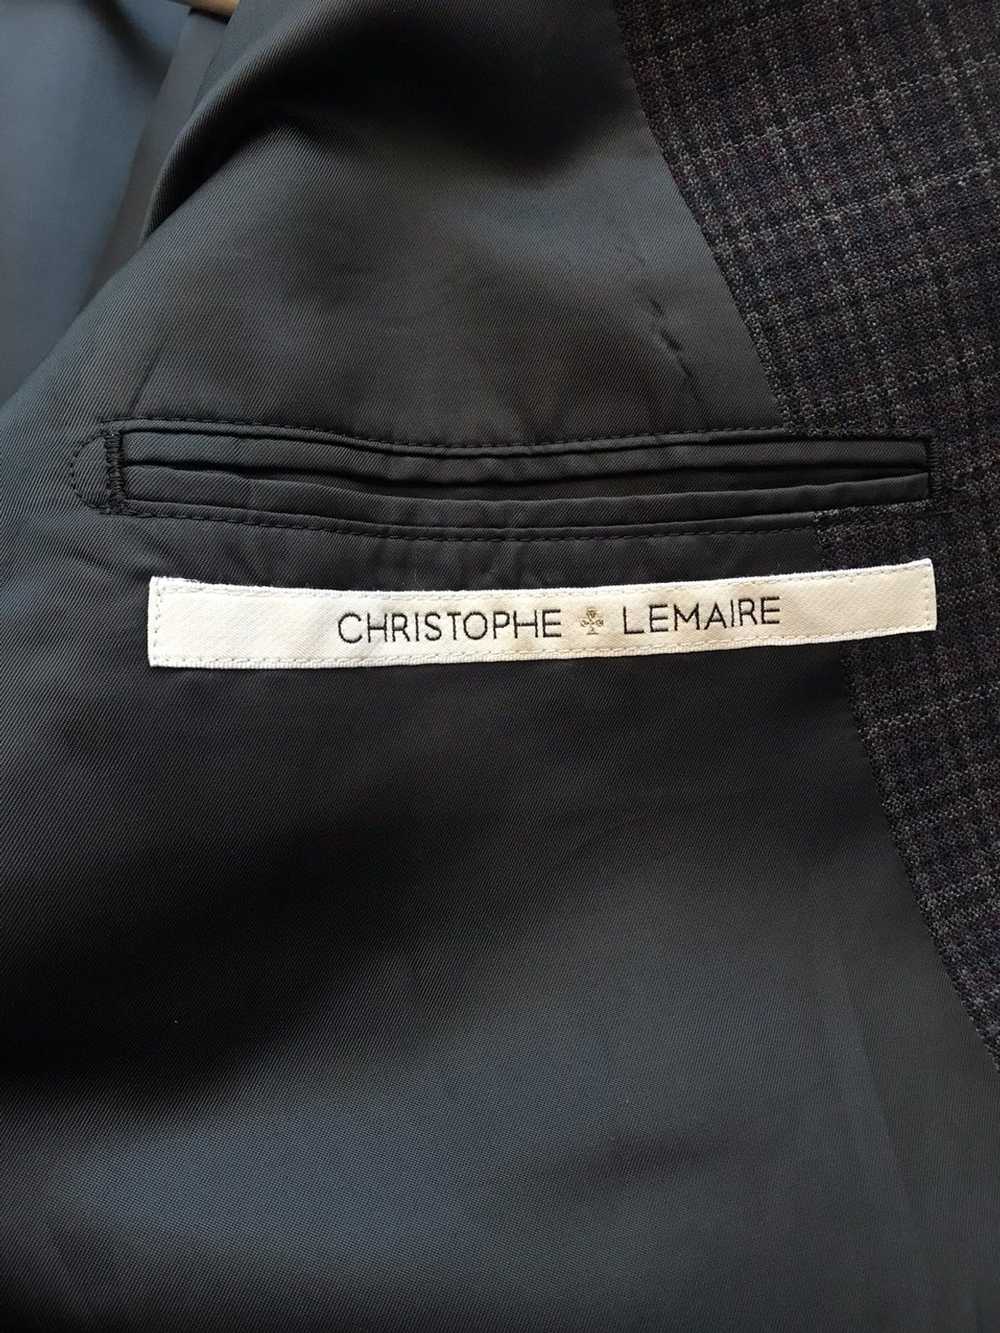 Christophe Lemaire Rare Lemaire wool tartan blazer - image 2